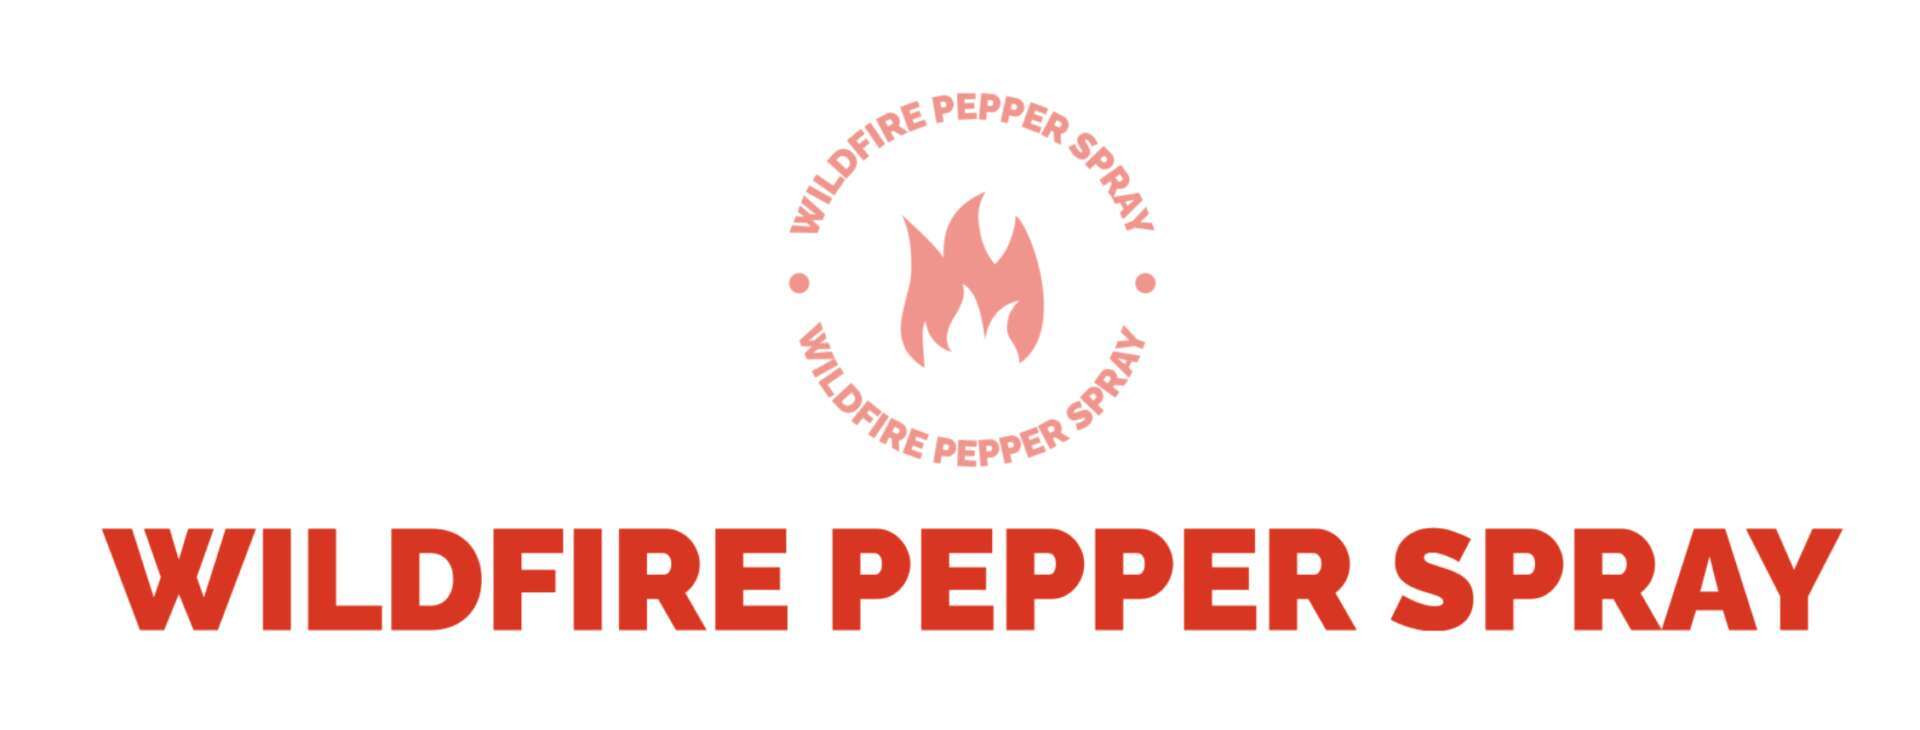 Wildfire Pepper Spray